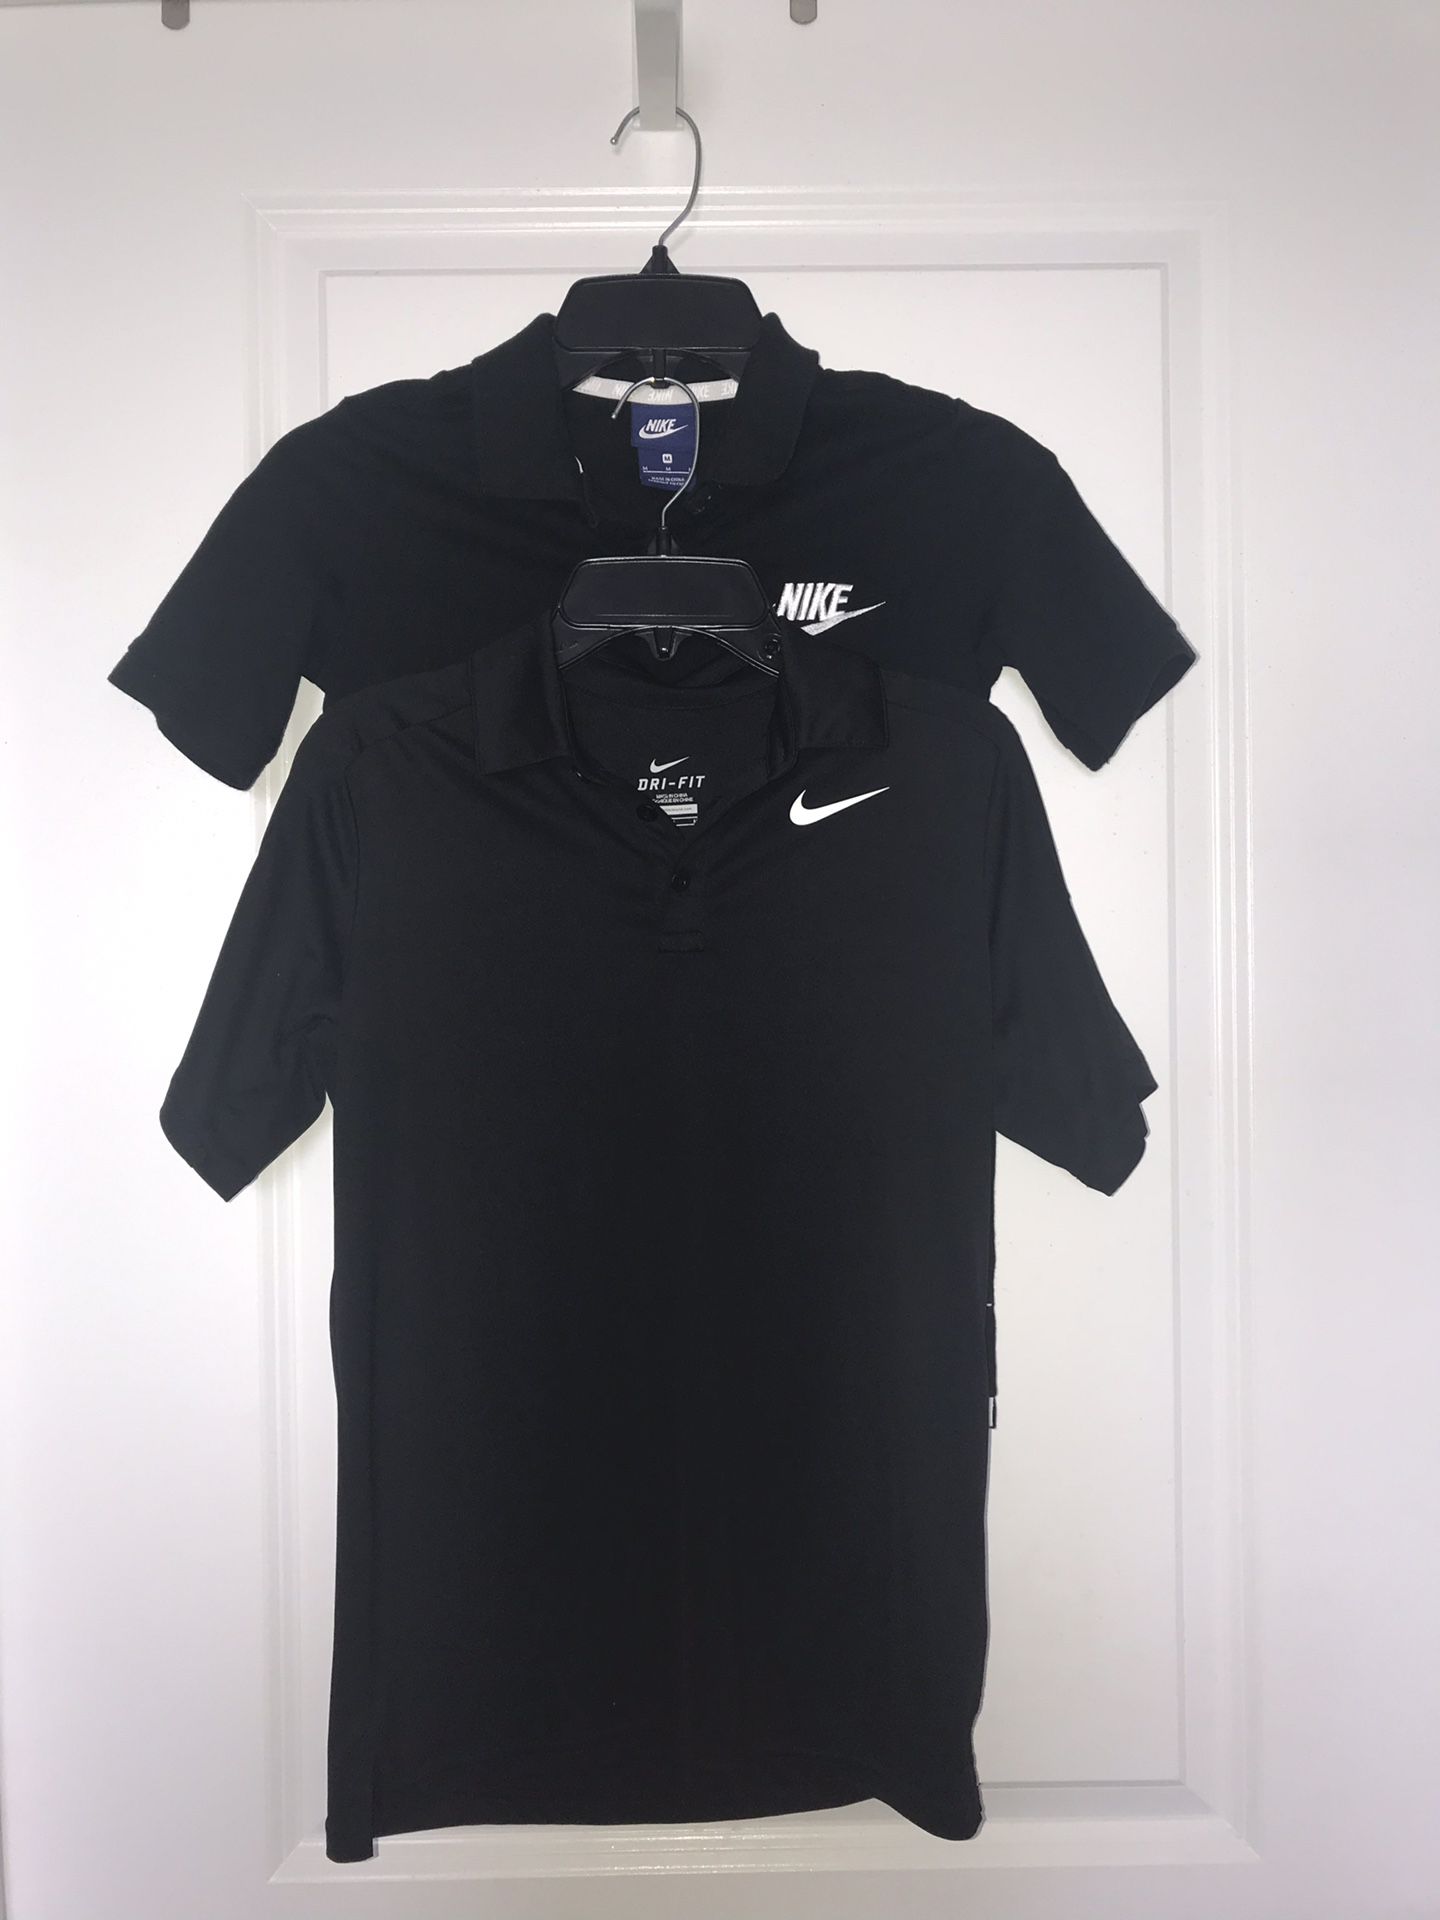 Boys Nike Black Shirts (2) Size M